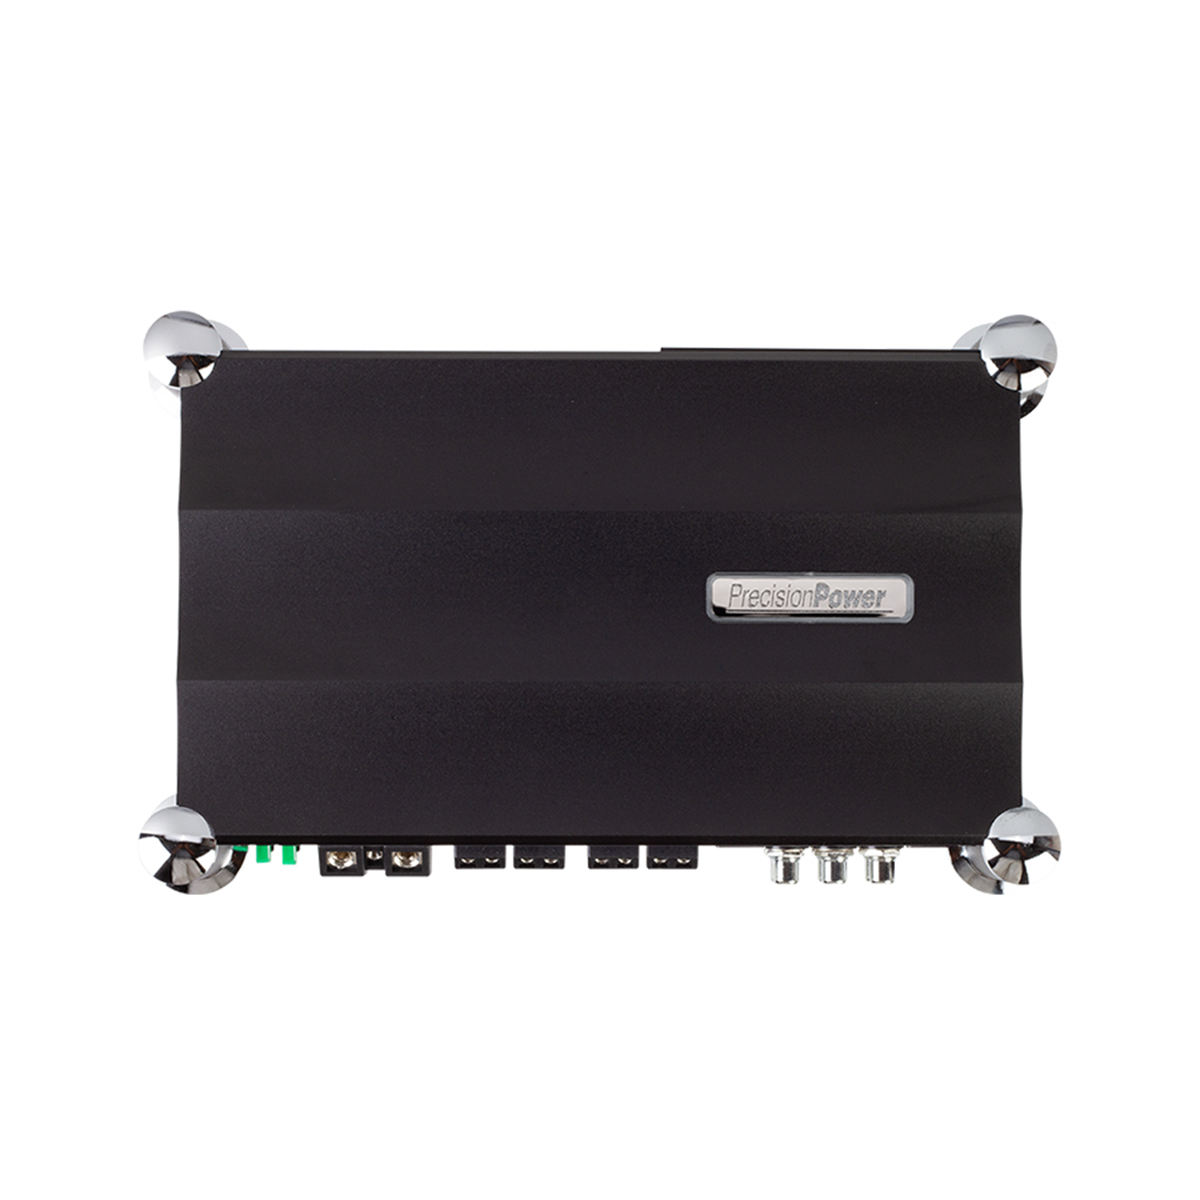 PPI Compact ATOM Series Power Amplifier A7004D 700w Max 4ch Class D Amp-Black